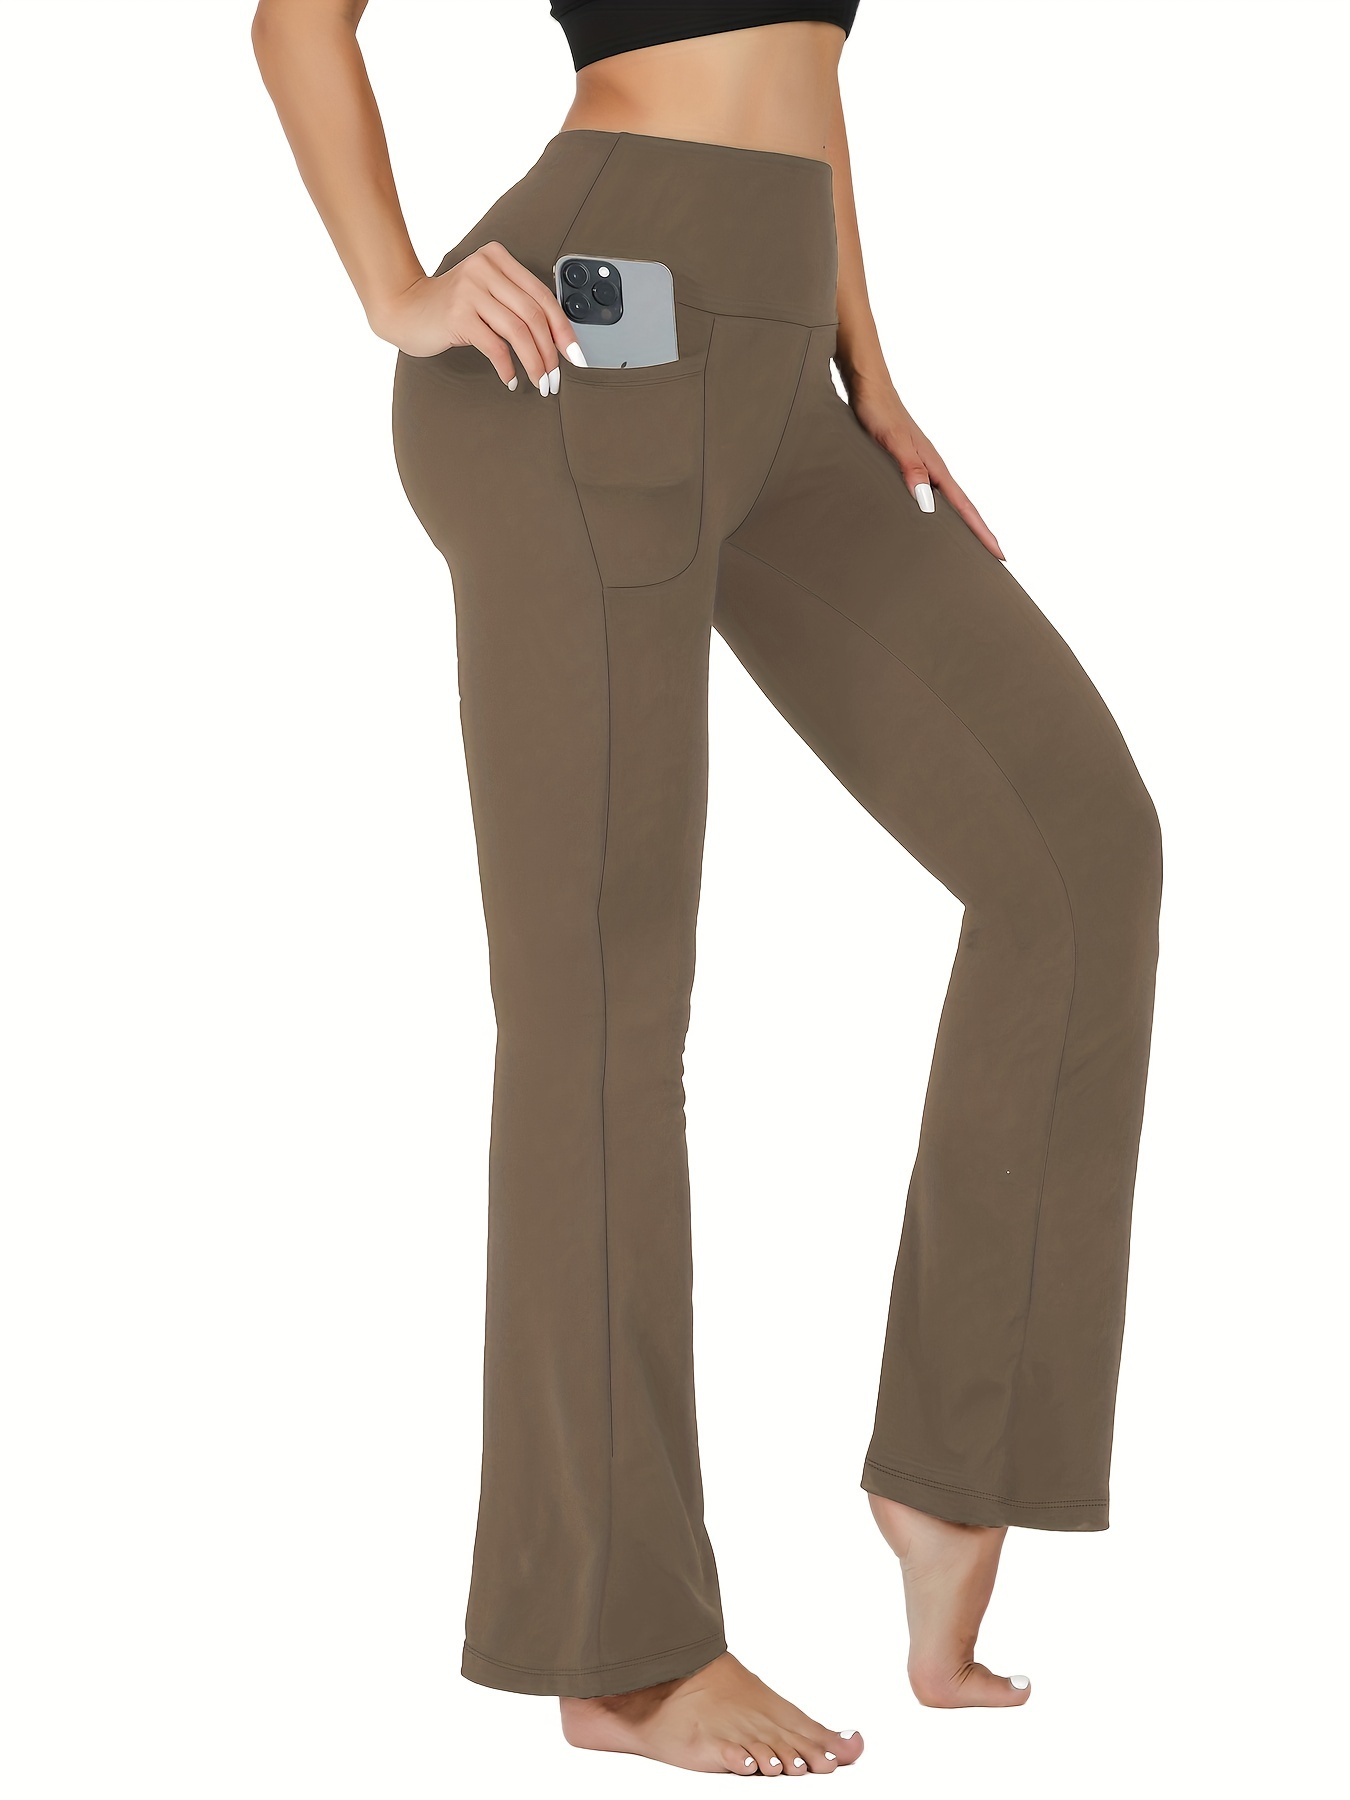 IUGA High Waist Yoga Pants Tummy Control Leggings With Pockets - Coffee / XS